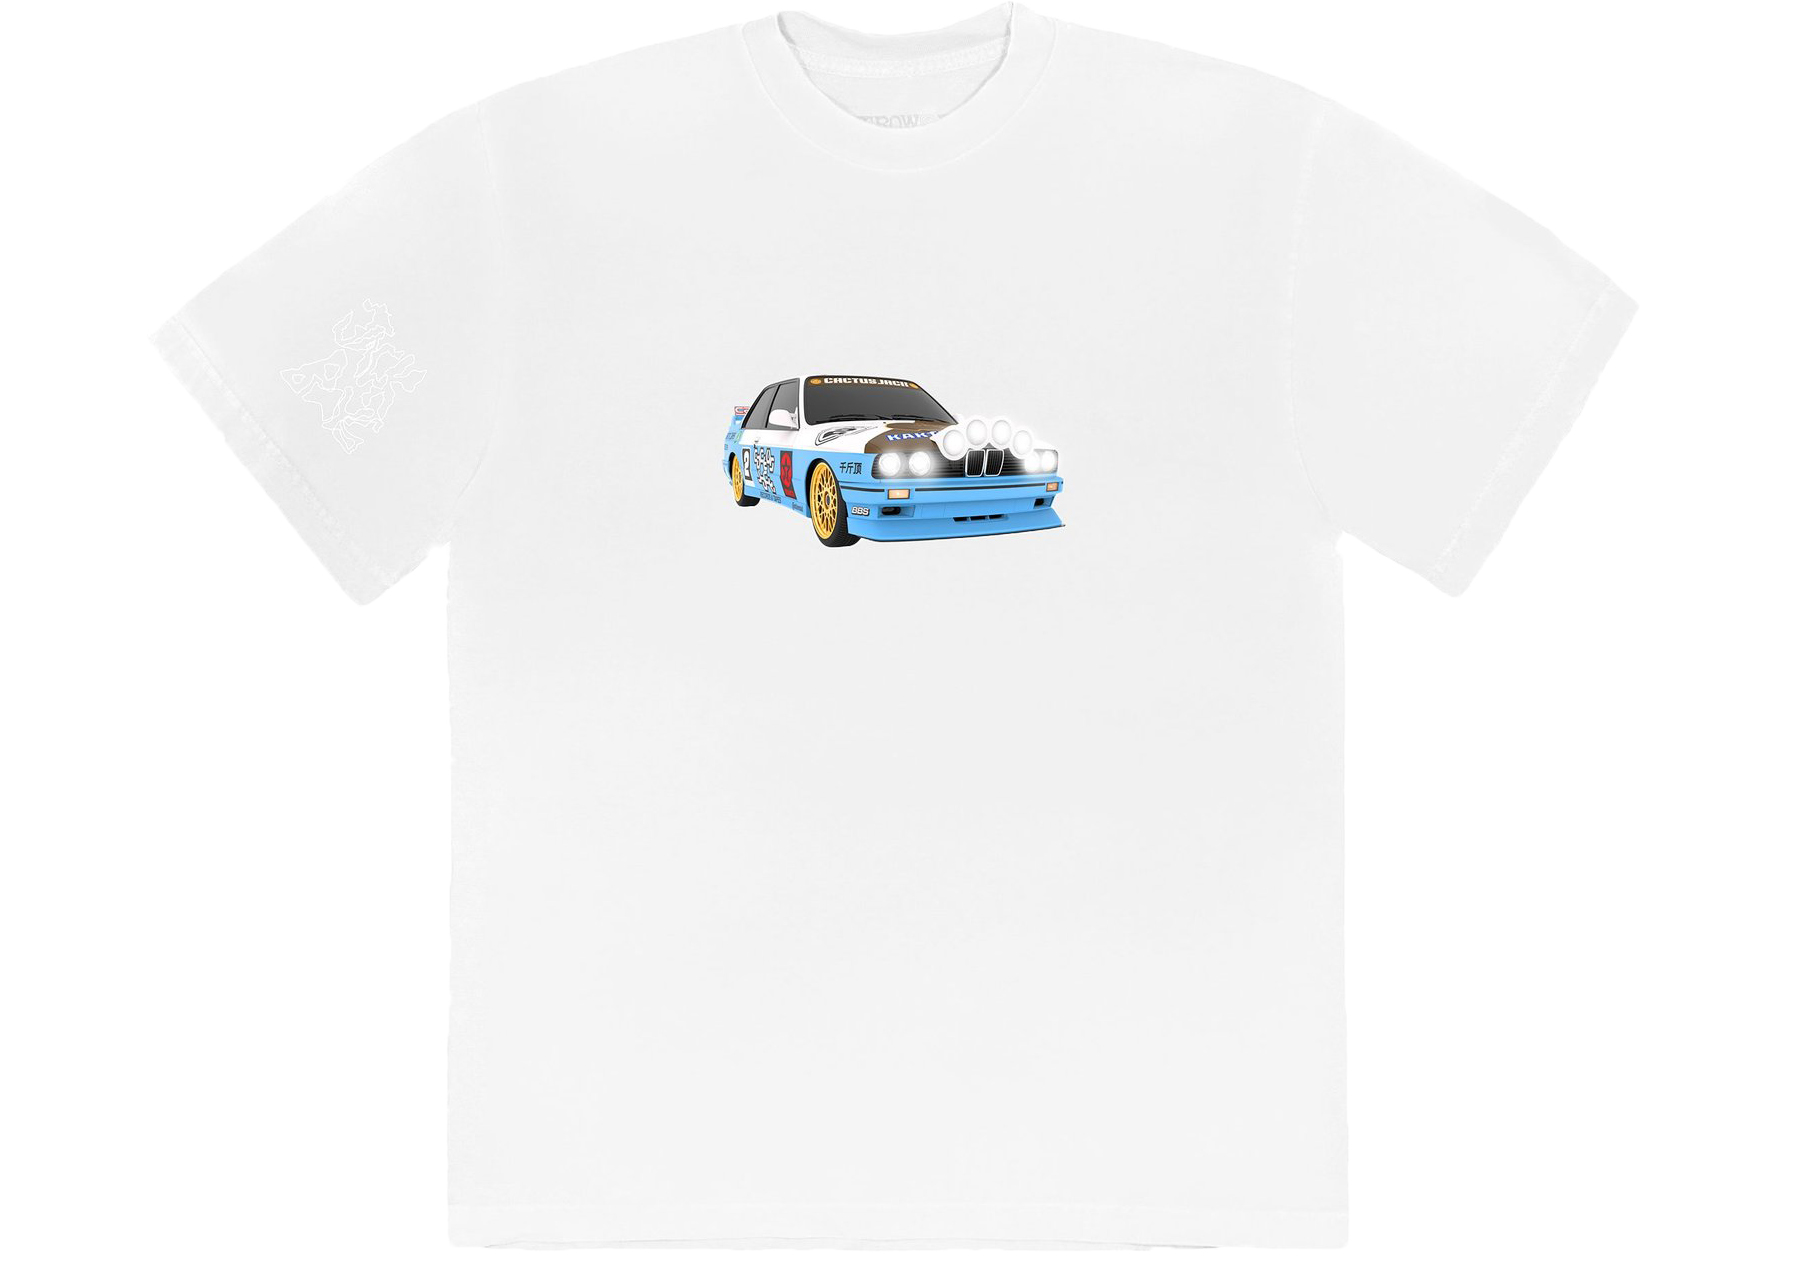 Travis Scott JACKBOYS Vehicle T-Shirt White